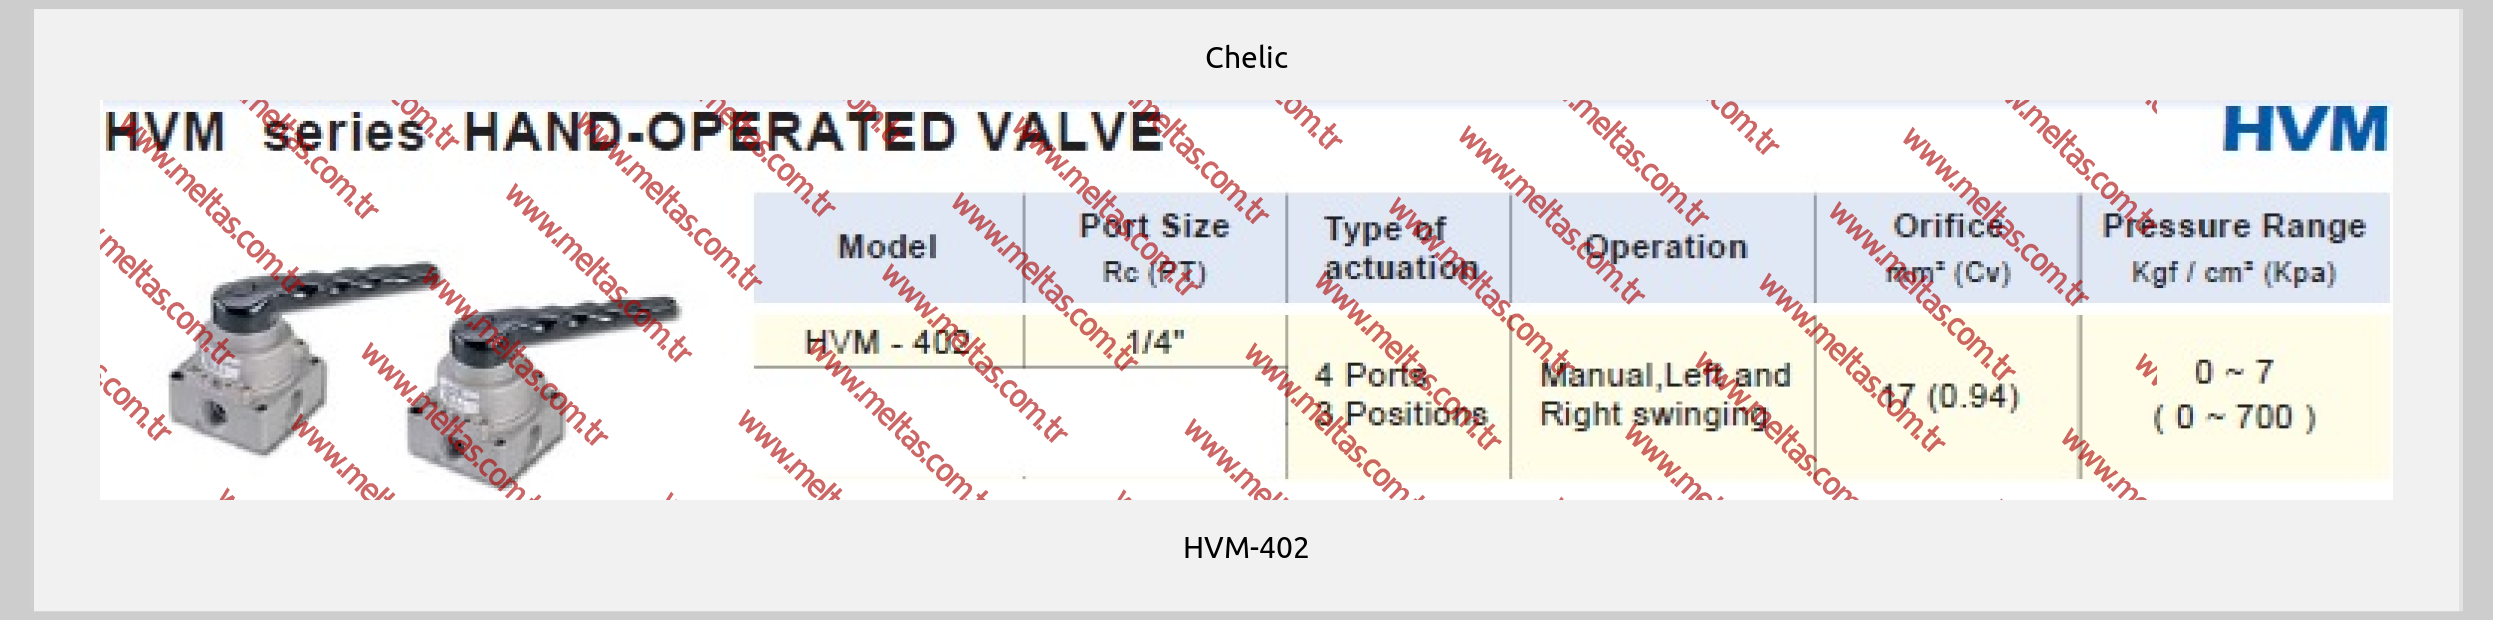 Chelic-HVM-402